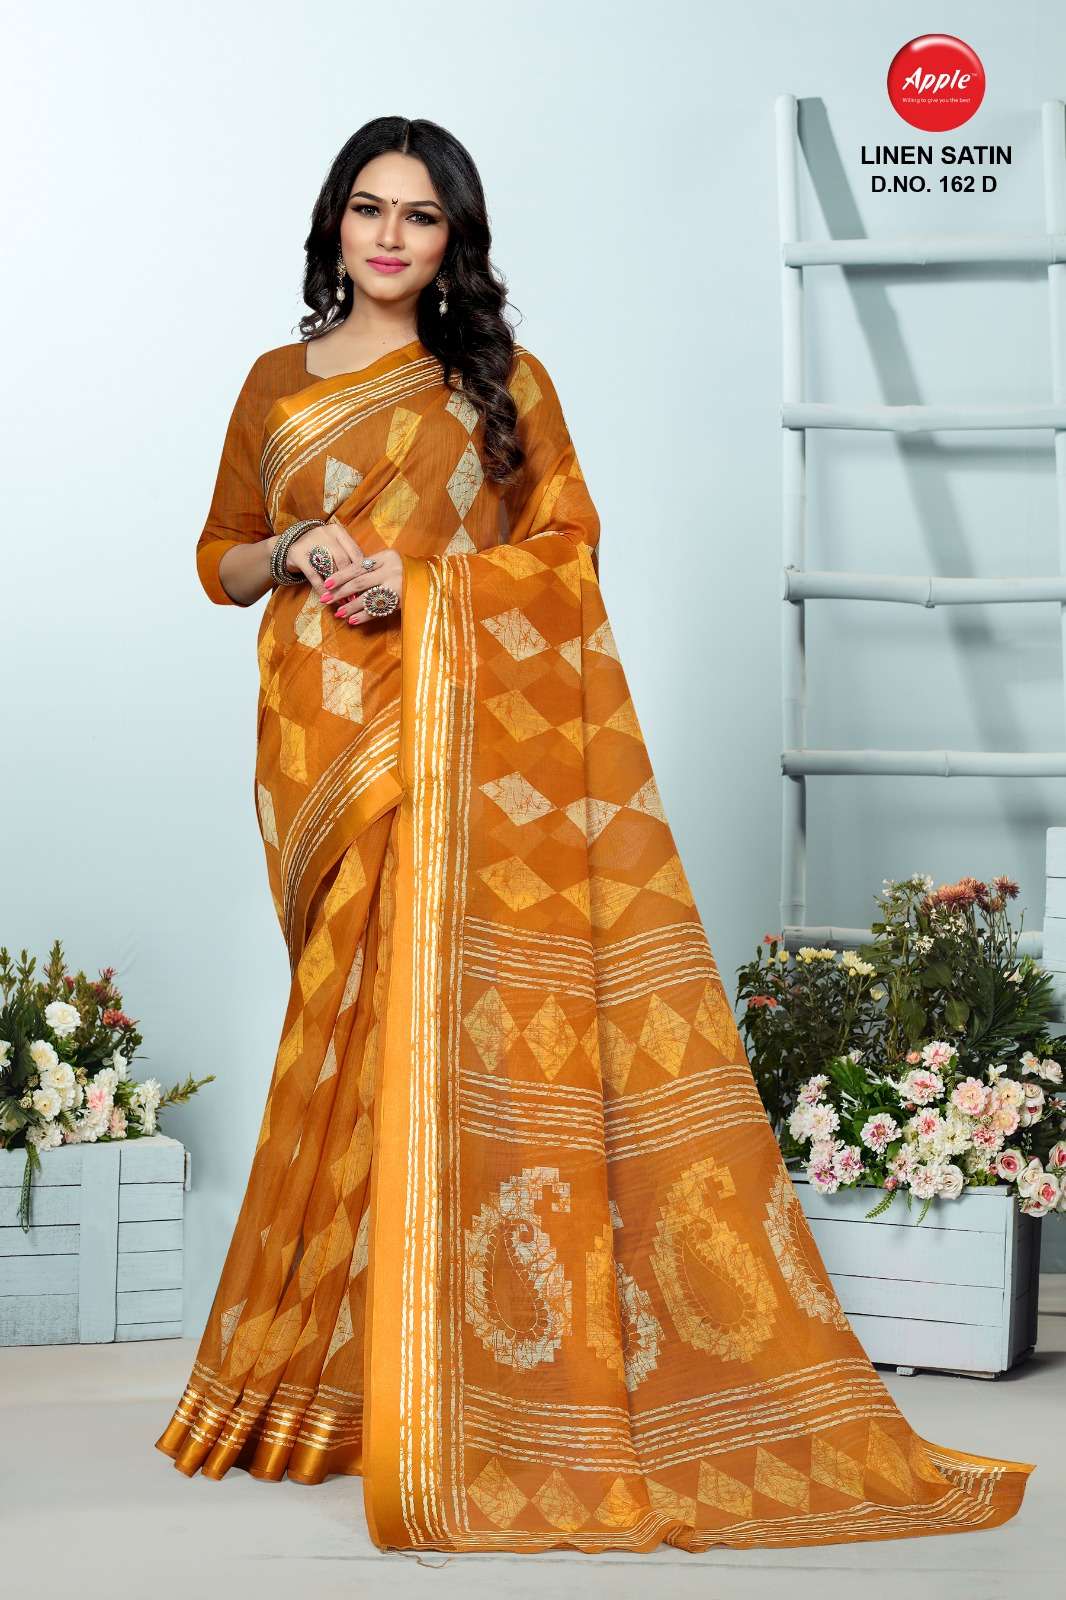 linen satin 162 design by apple cotton saris 